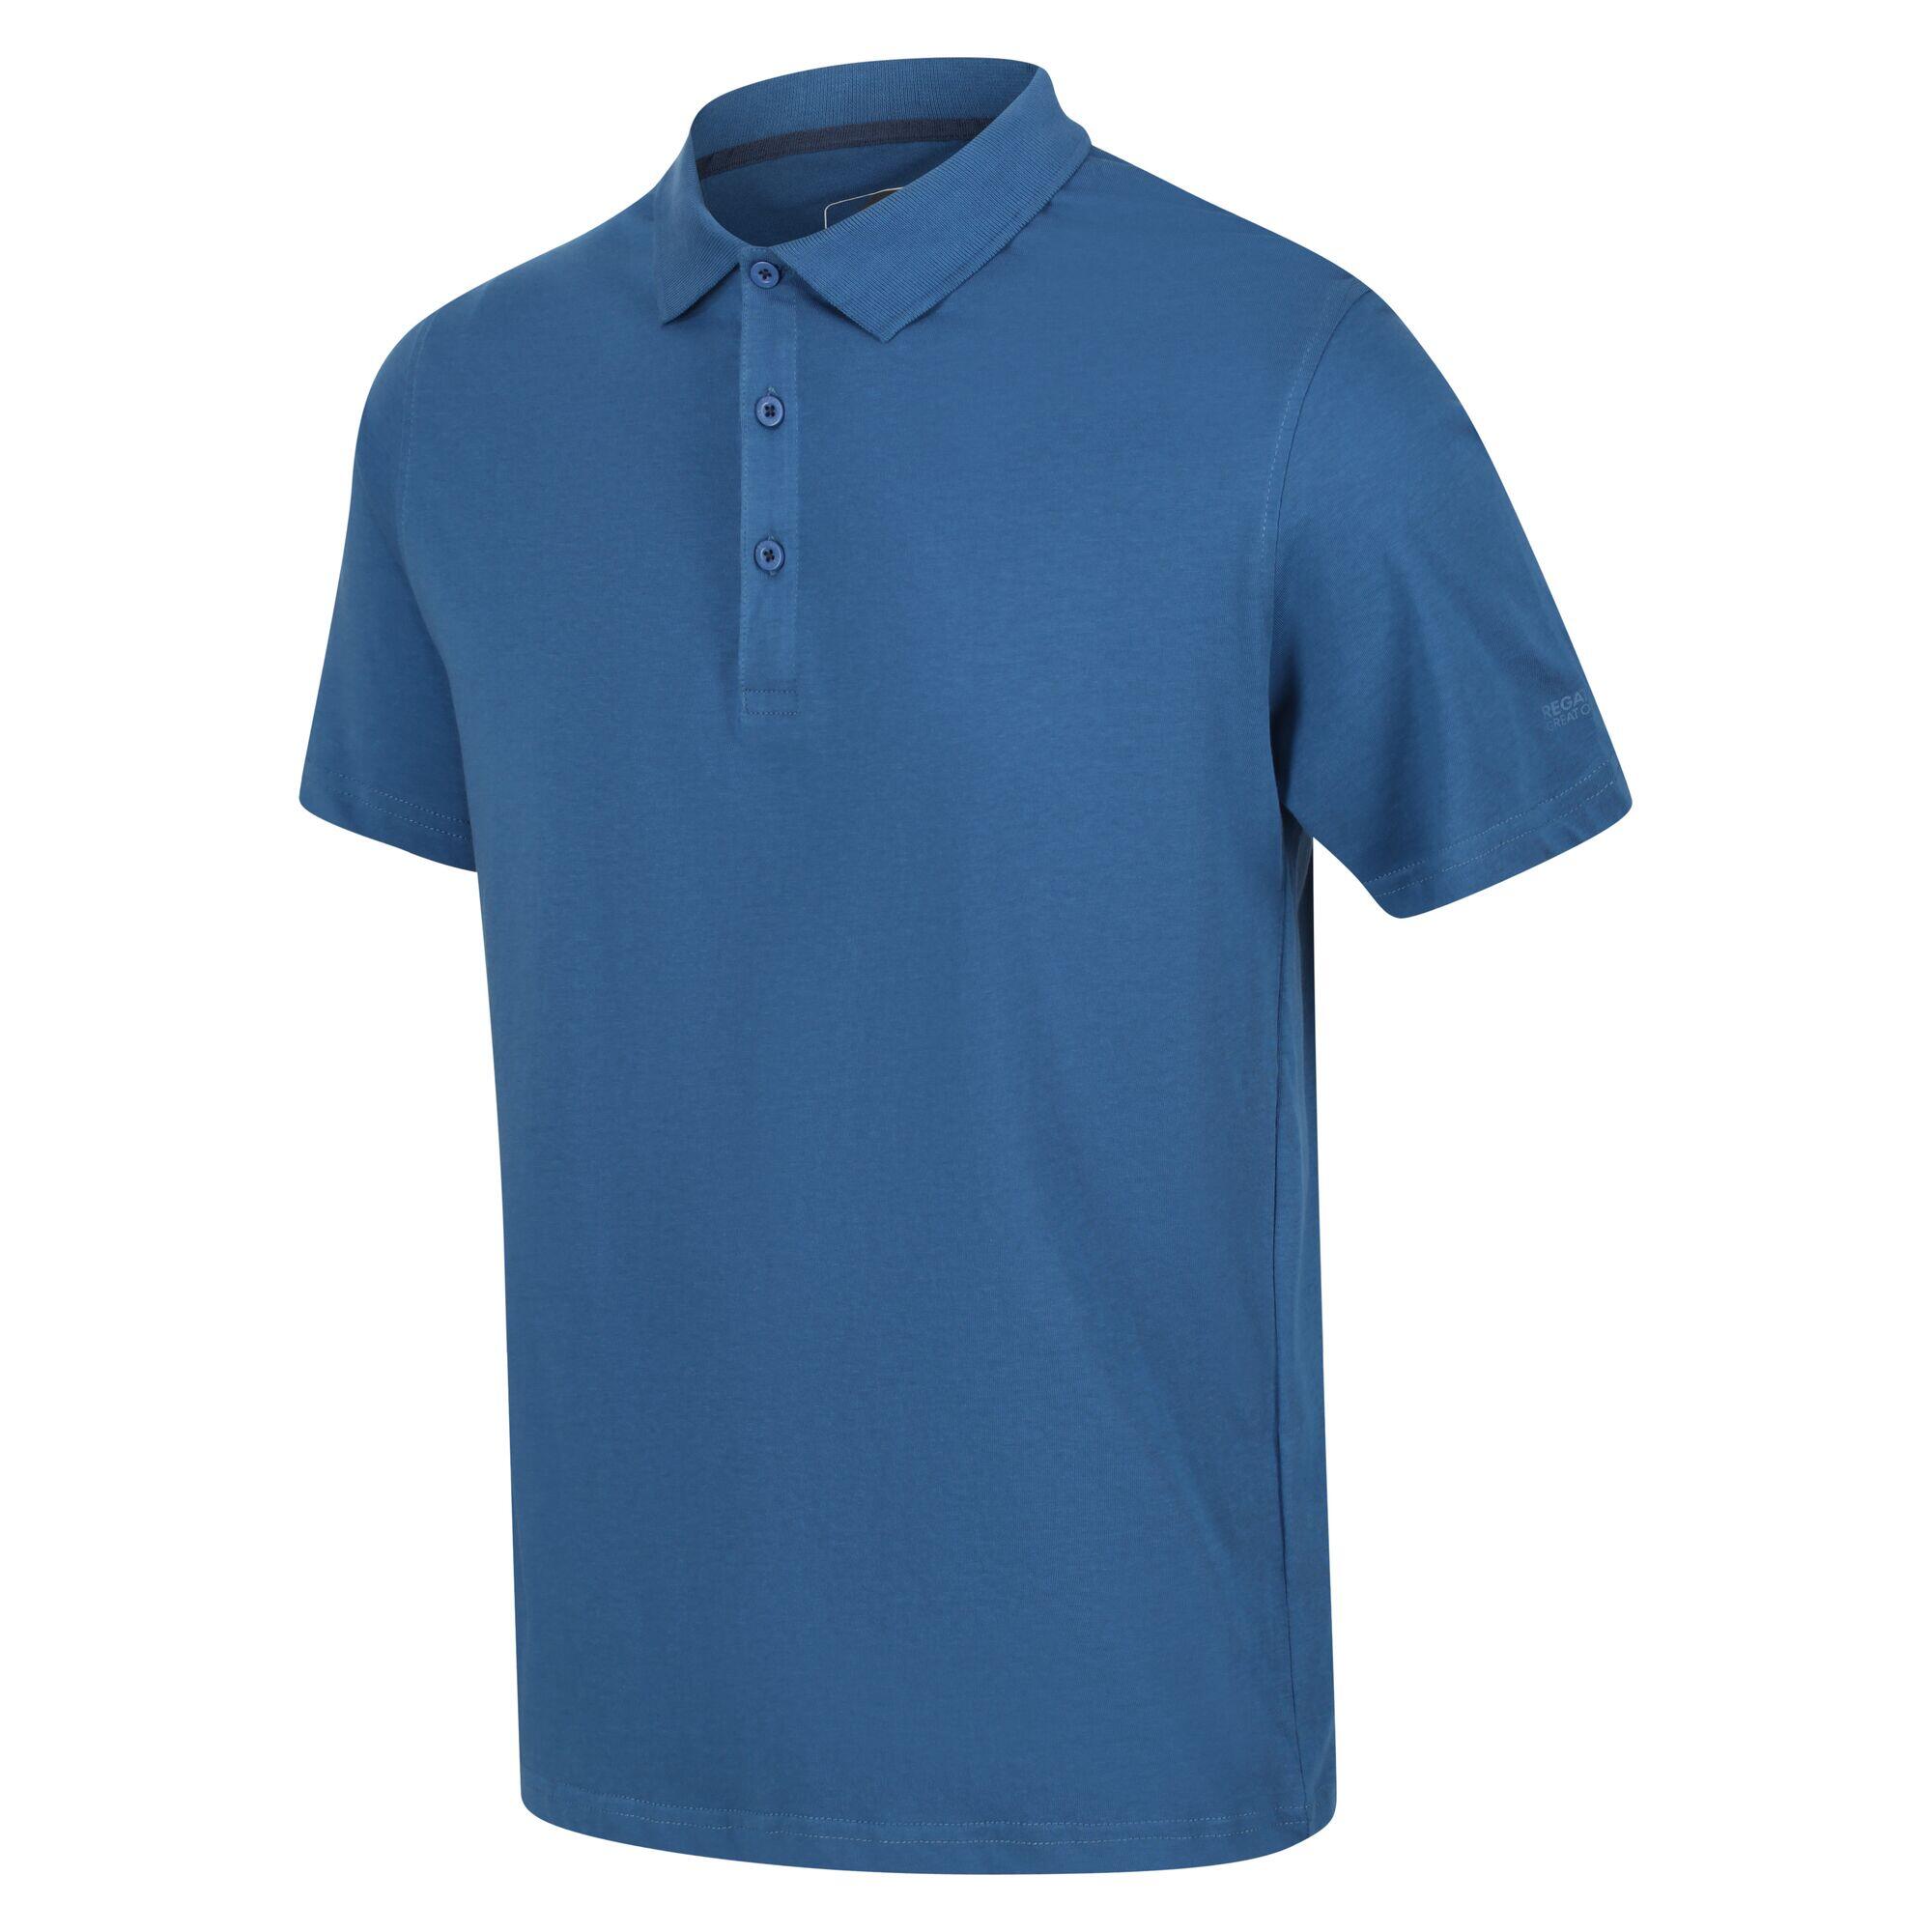 Sinton Men's Fitness Short Sleeve Polo Shirt - Dynasty Blue 4/5